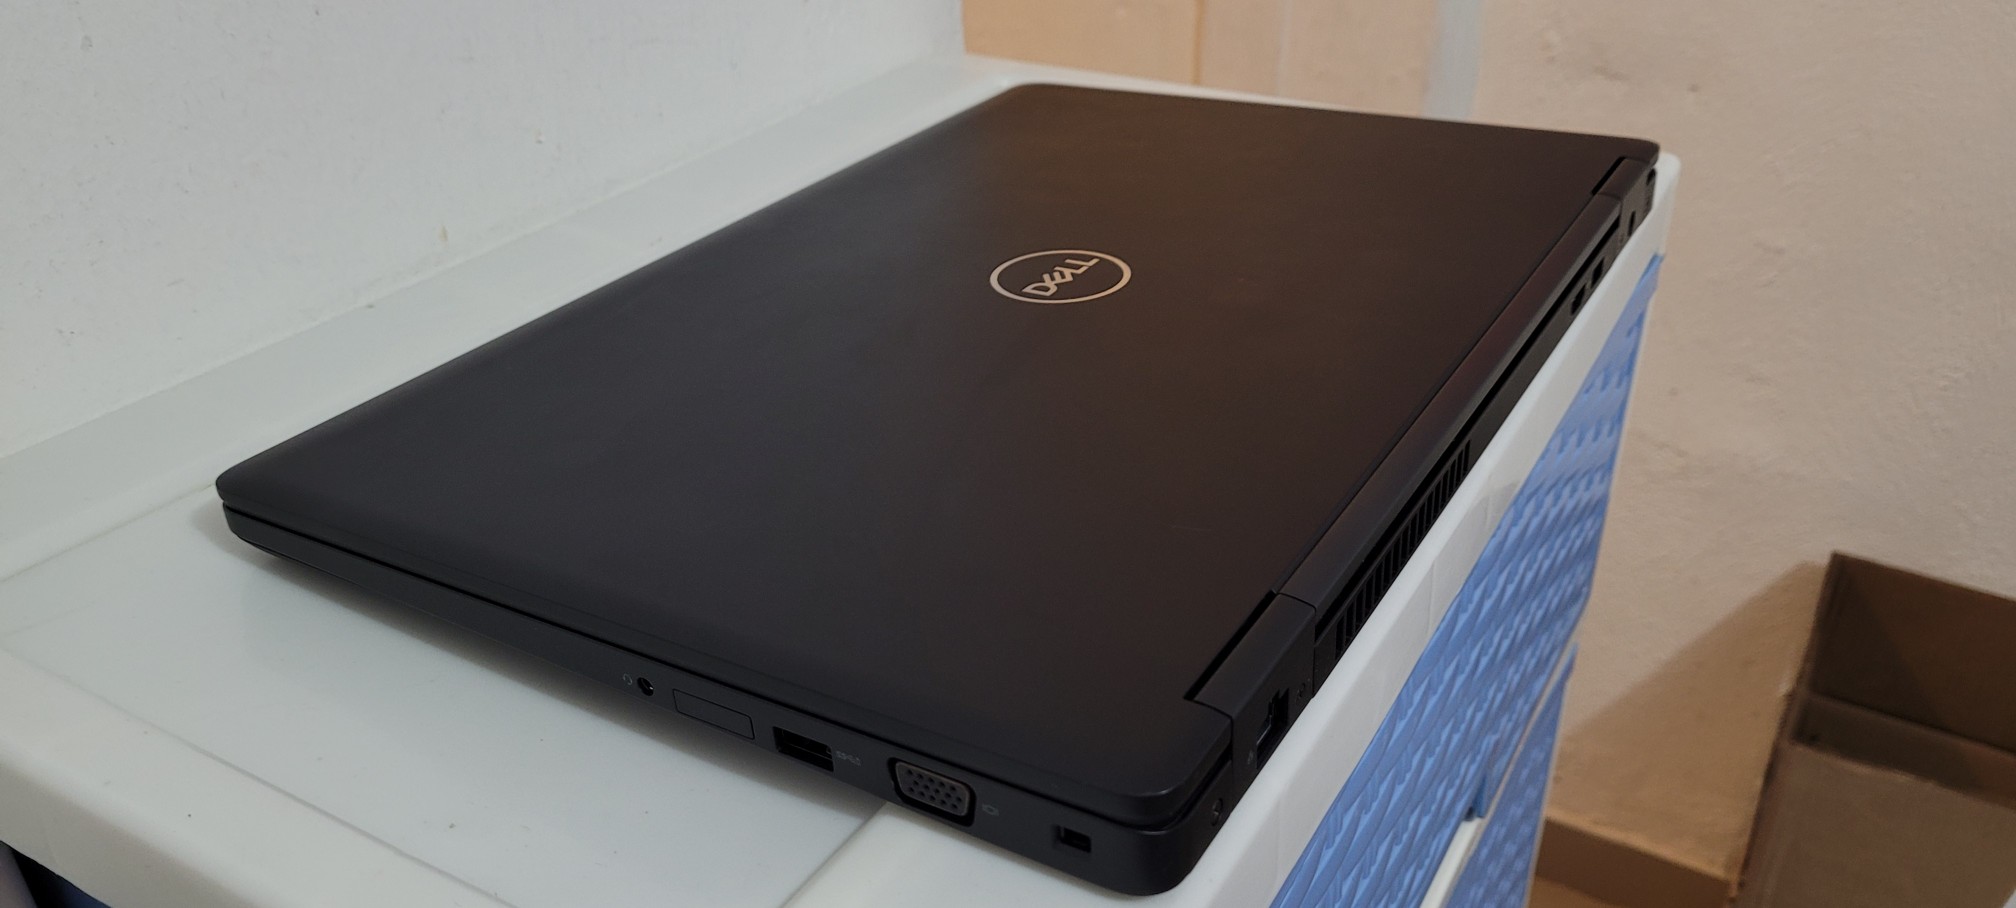 computadoras y laptops - Laptop Dell 5570 17 Pulg Core i7 6ta Ram 16gb ddr4 Disco 256gb SSD Doble Video  2